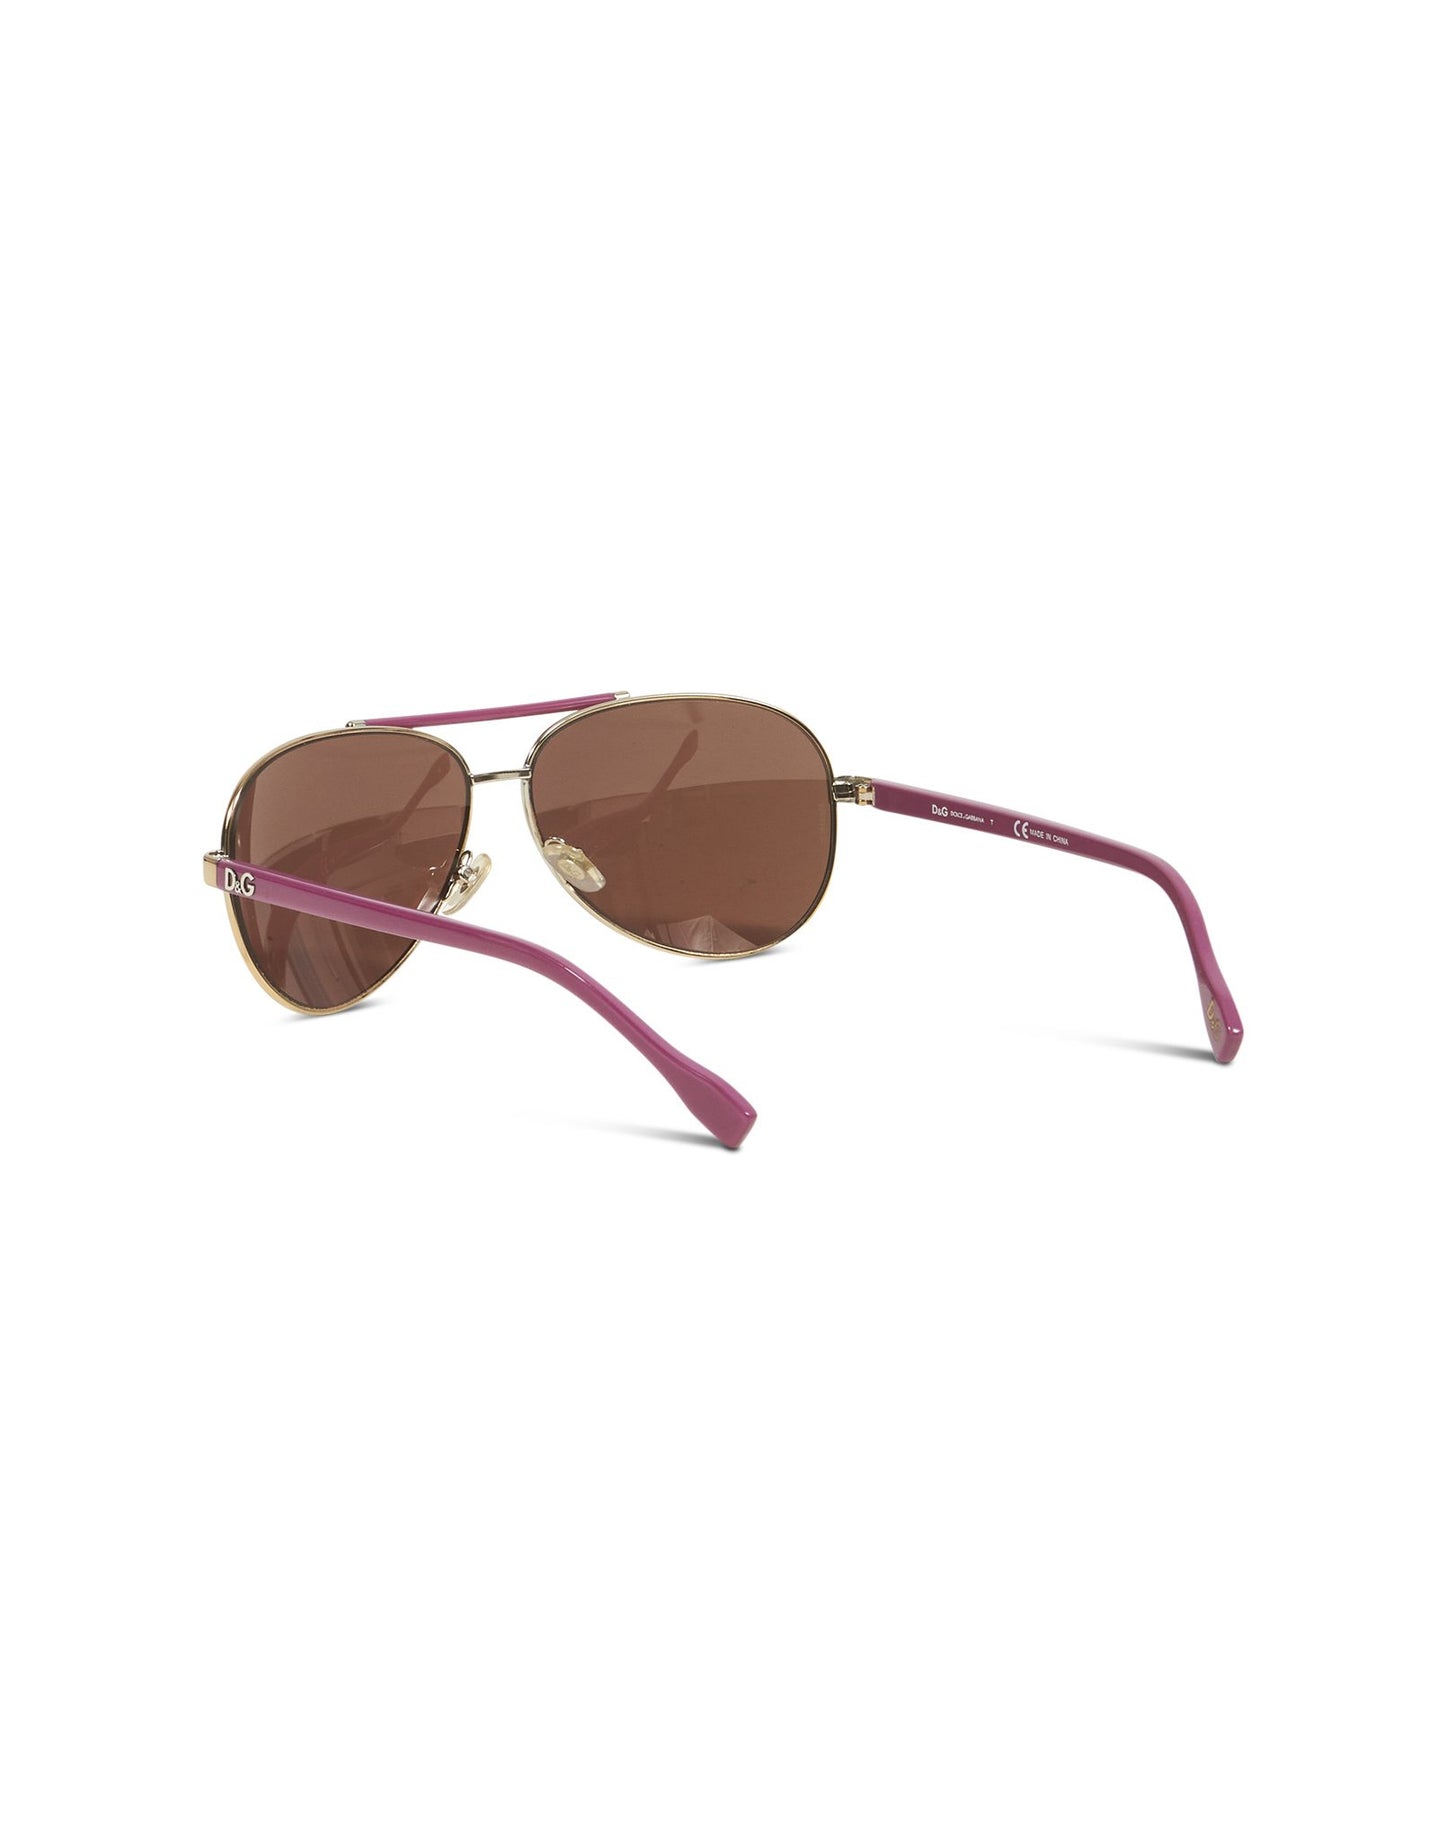 Dolce & Gabbana Purple D&G 6078 Aviator Sunglasses